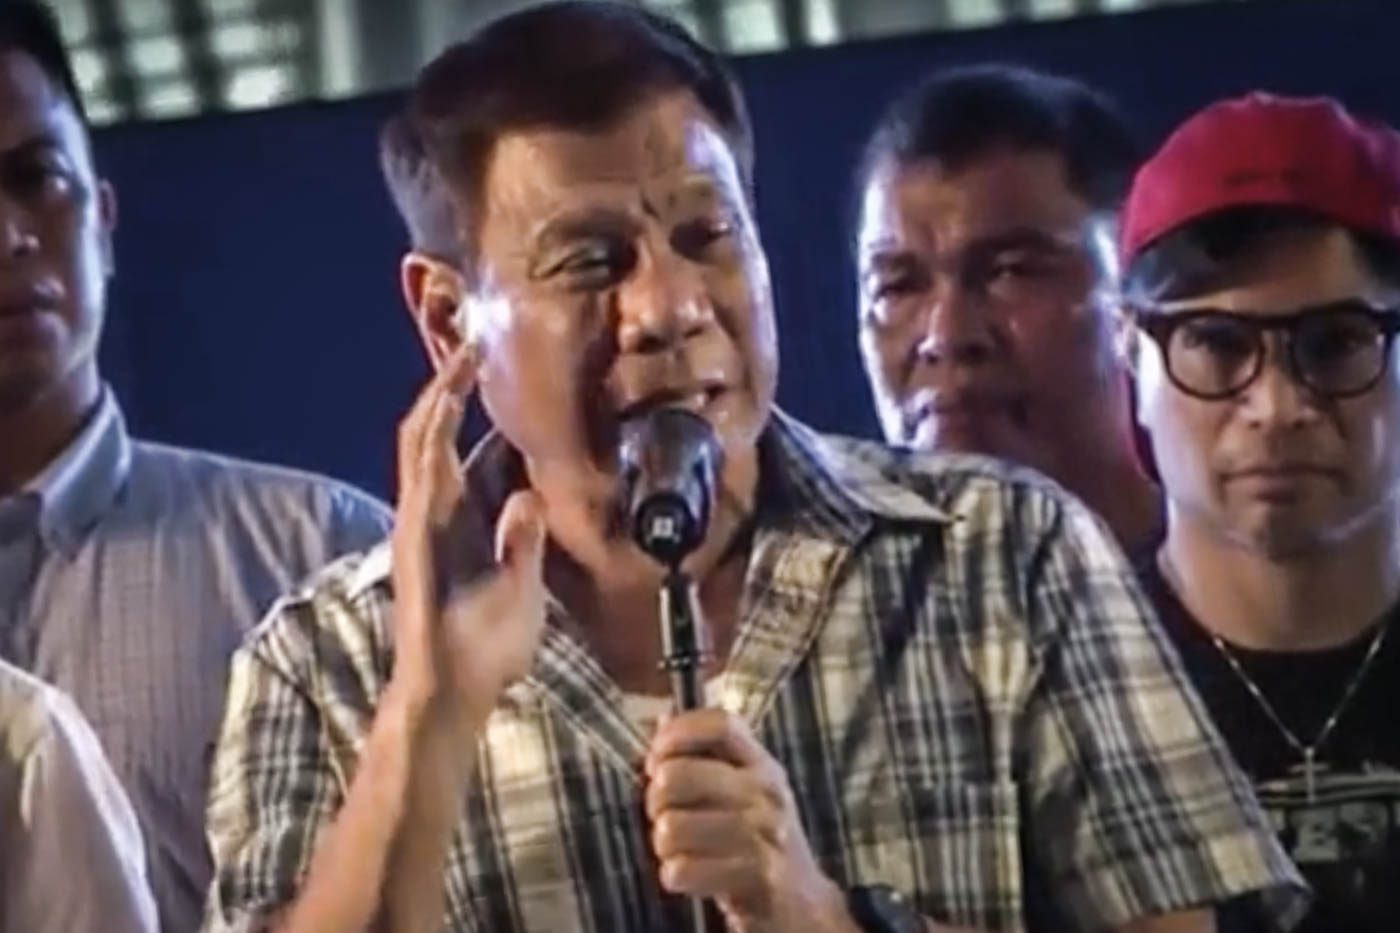 Media not allowed in Duterte inauguration venue – organizer